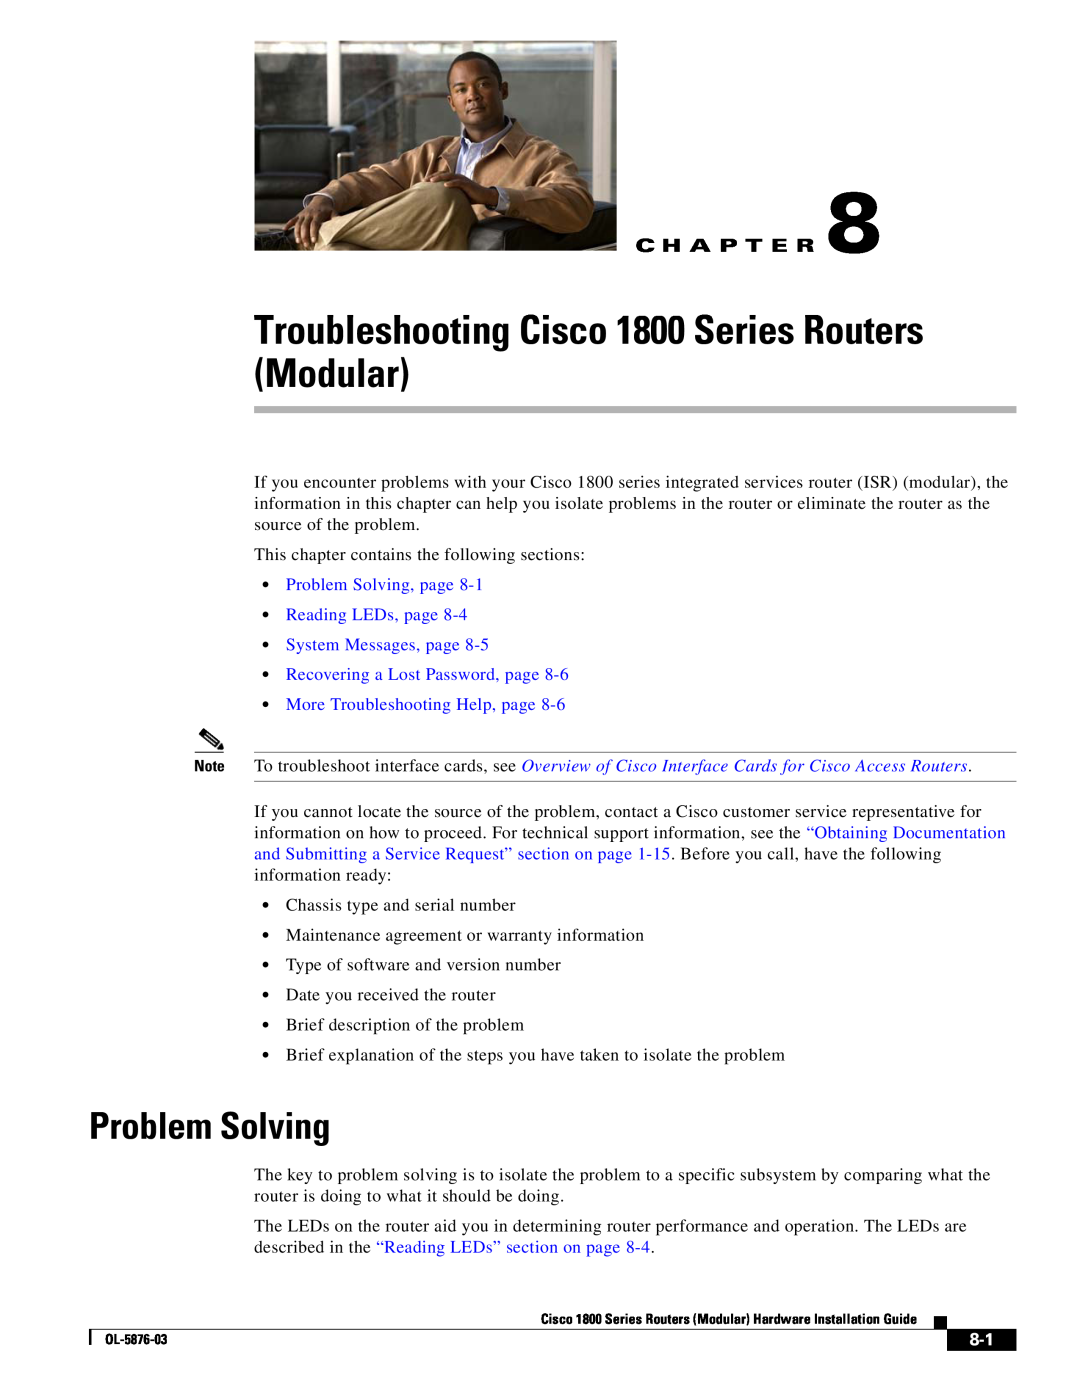 Cisco Systems CISCO1841-HSEC/K9-RF manual Troubleshooting Cisco 1800 Series Routers Modular, Problem Solving, C H A P T E R 